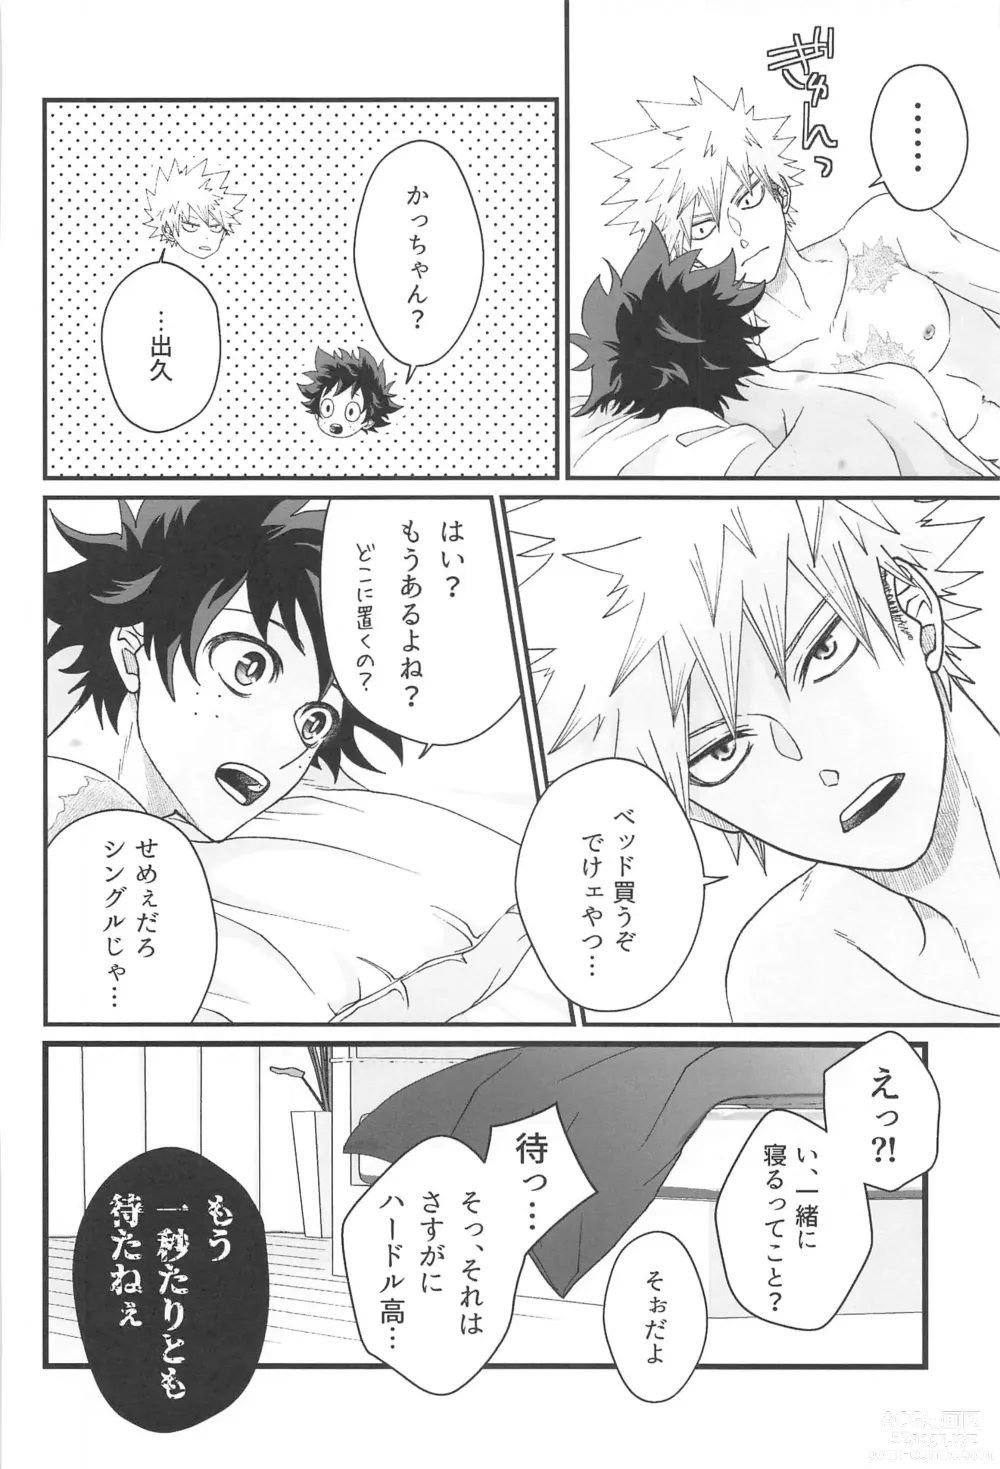 Page 35 of doujinshi 0.01